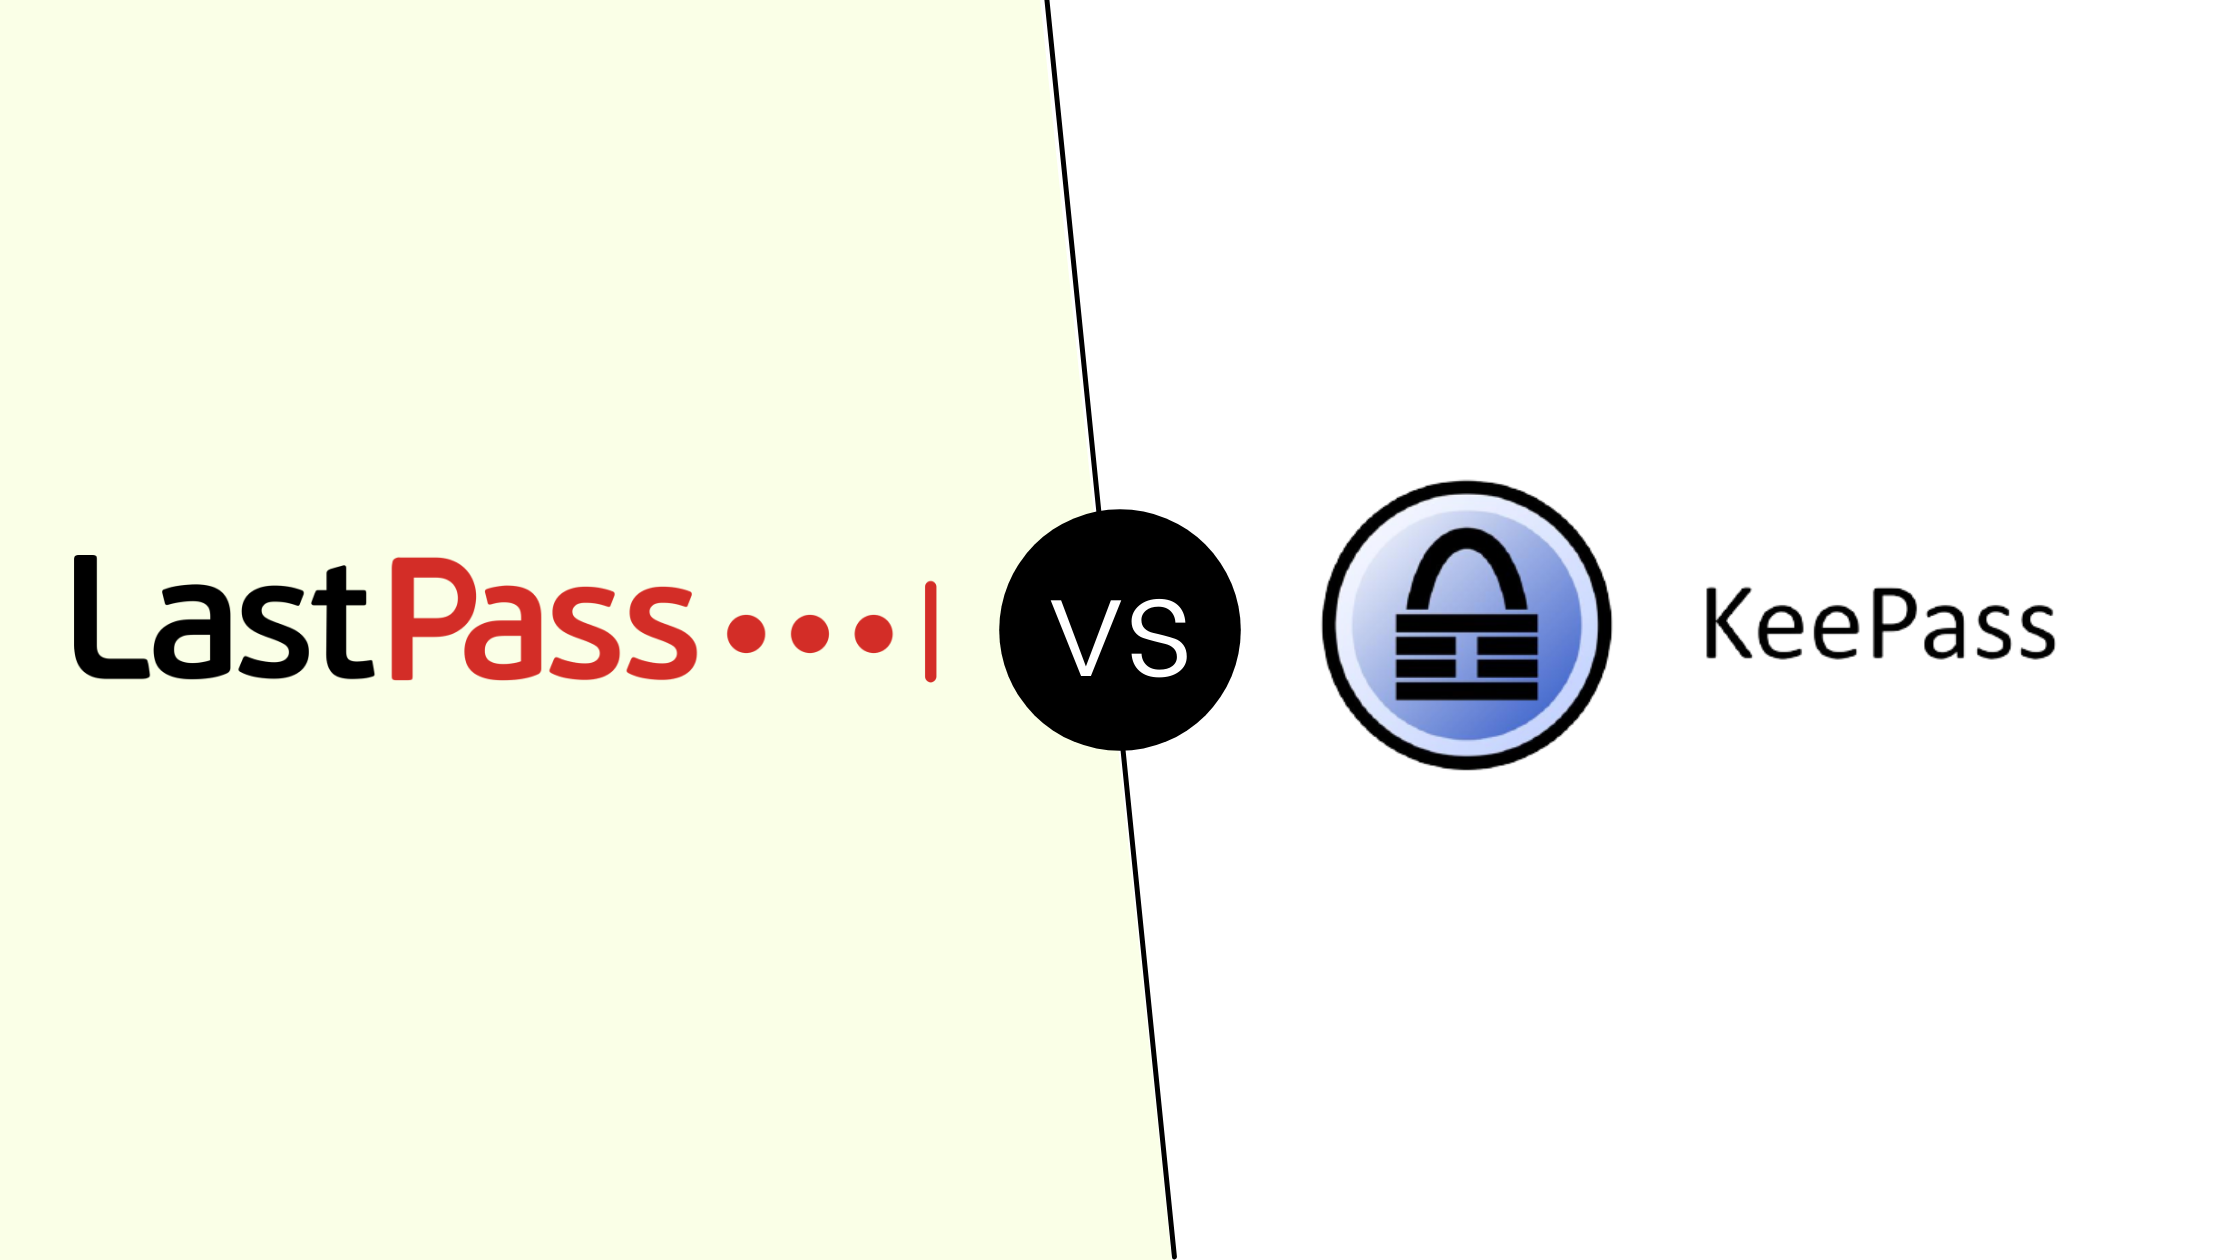 Lastpass vs Keepass